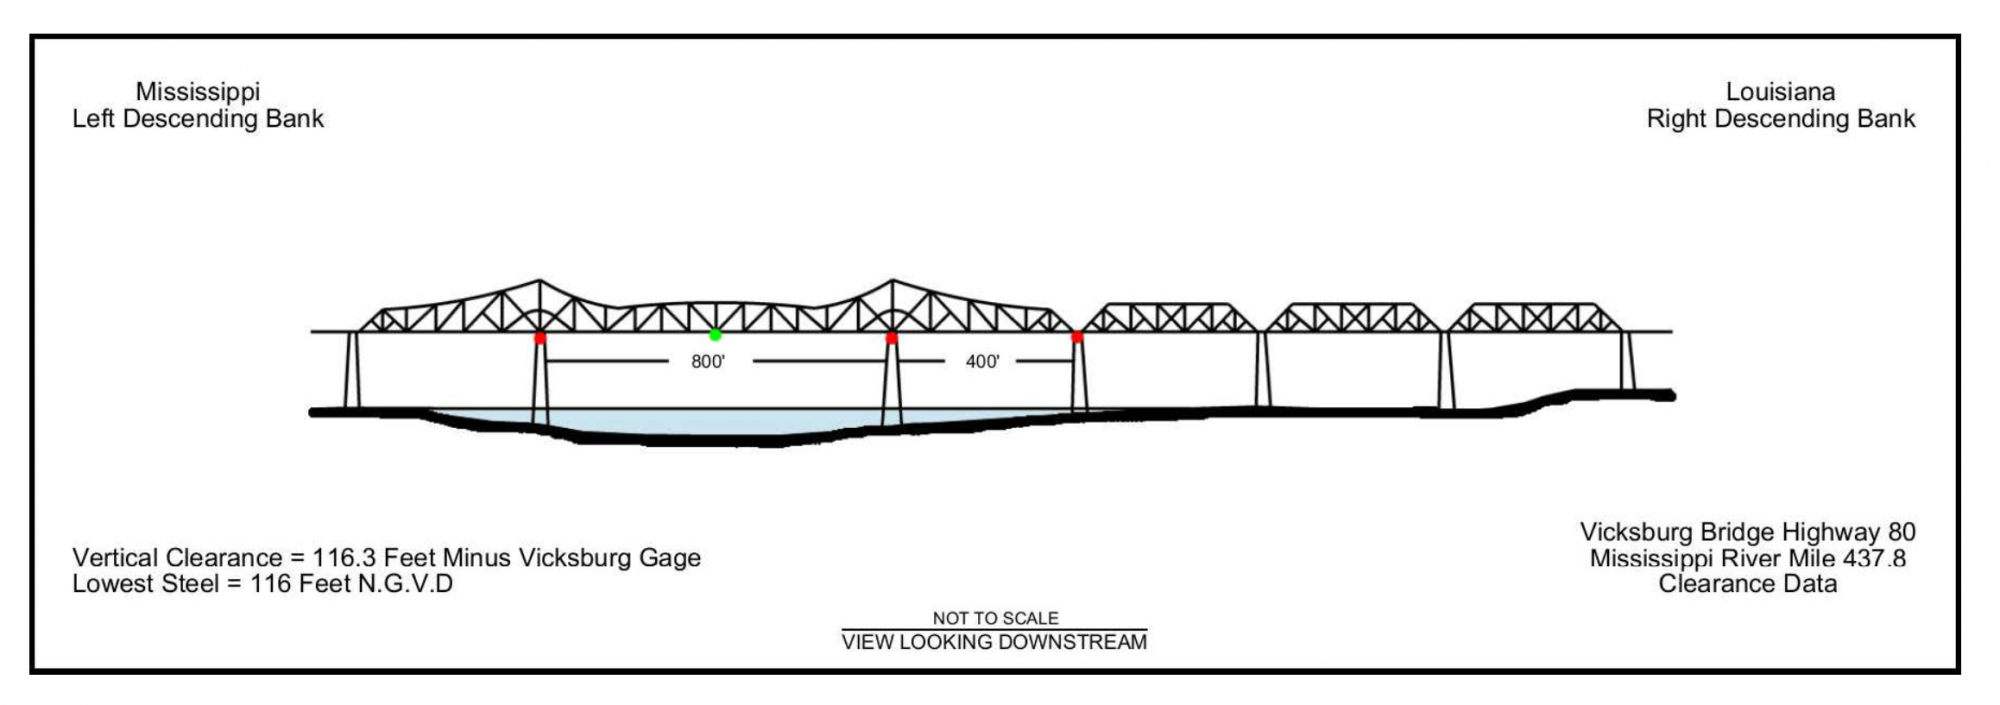 Vicksburg Railway and Hwy Bridge - Alt Span 4 Clearances | Bridge Calculator LLC